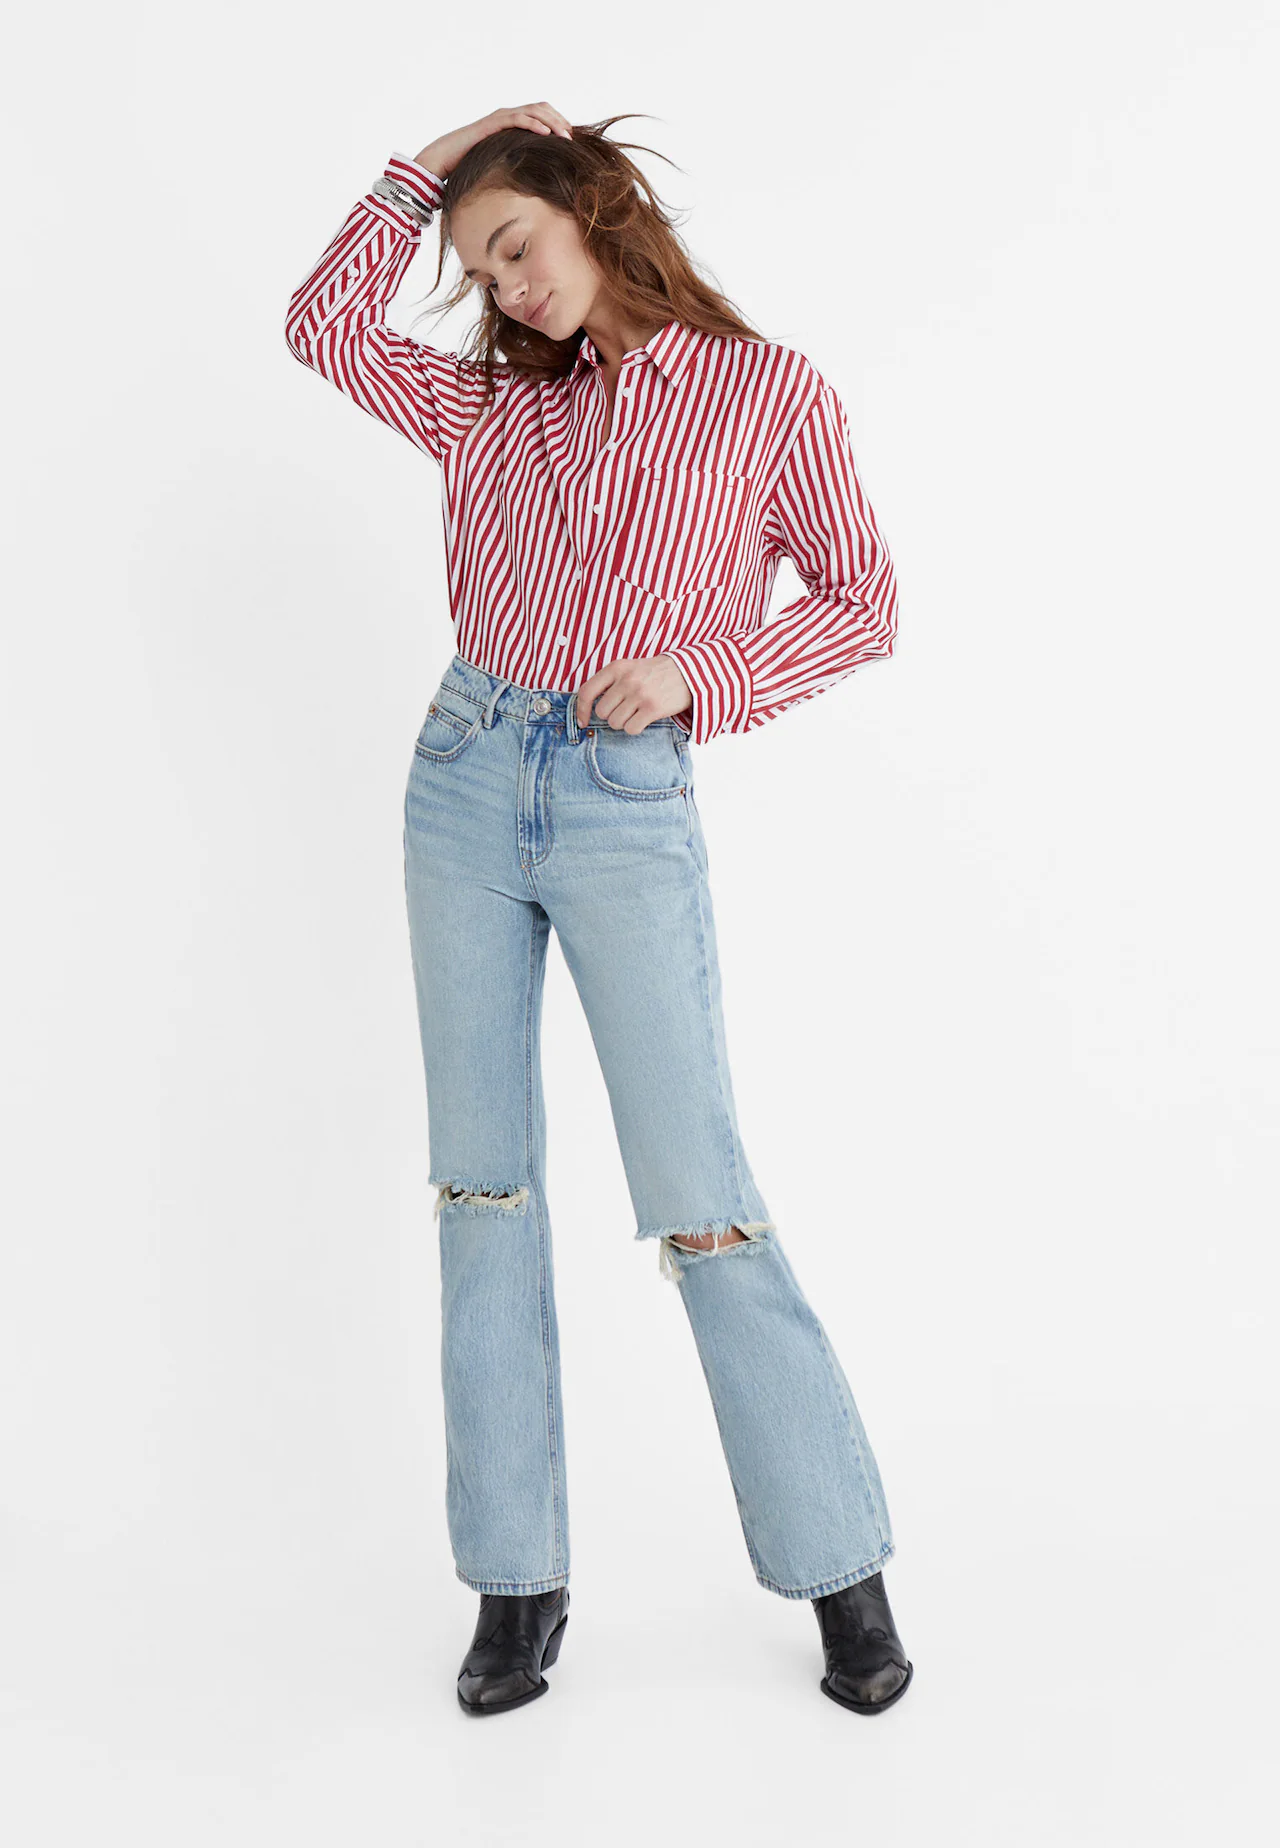 Vintage flared jeans - Women's fashion